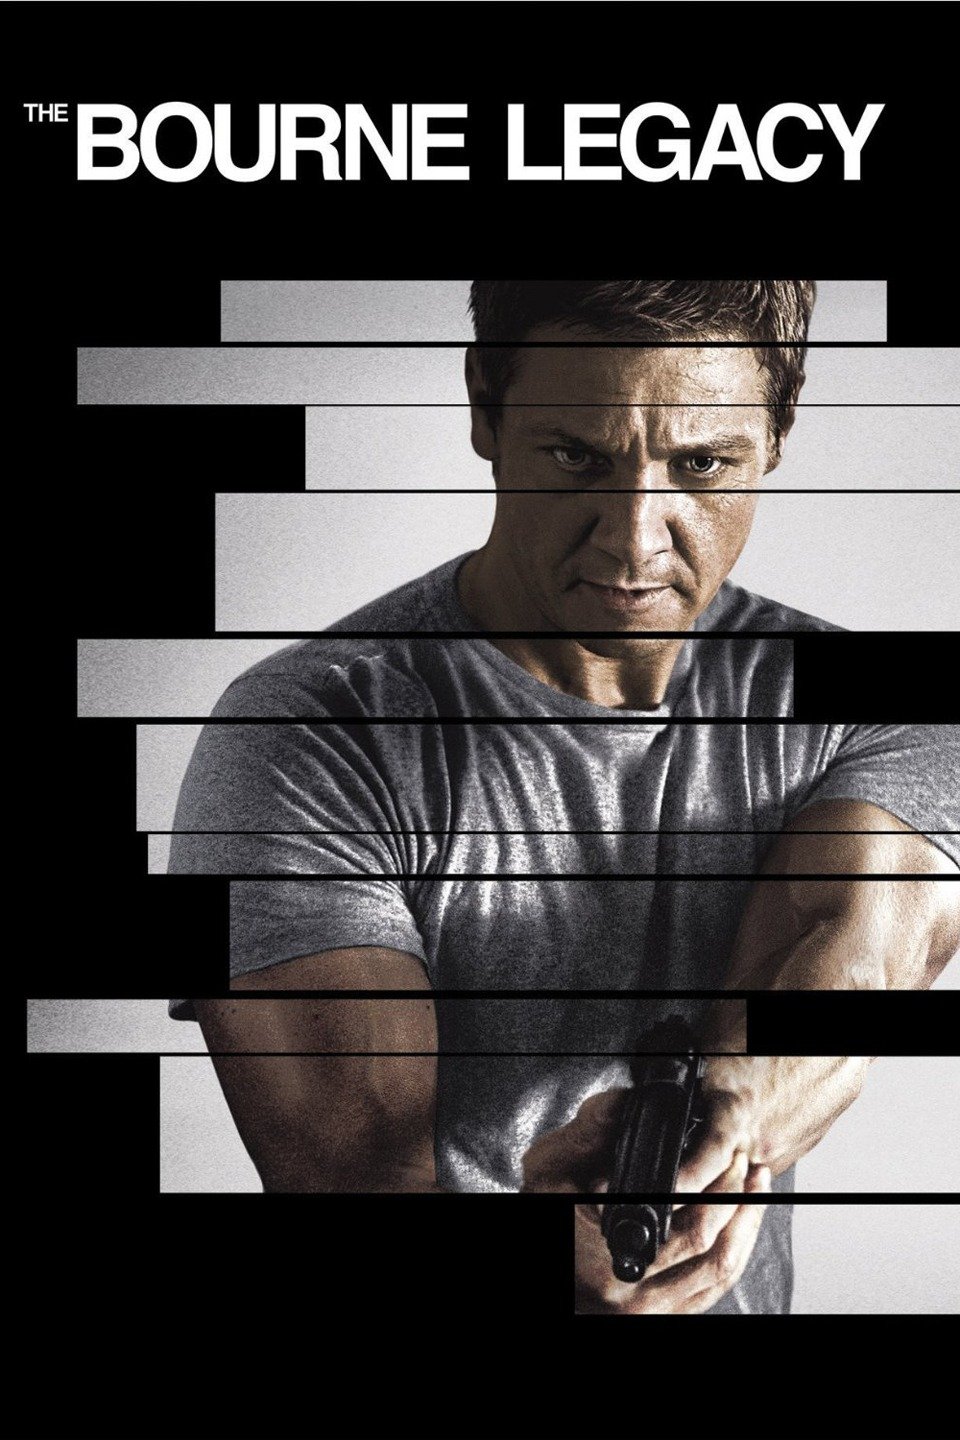 [MINI Super-HQ] The Bourne Legacy (2012) พลิกแผนล่า ยอดจารชน ภาค 4 [1080p] [พากย์ไทย DTS + เสียงอังกฤษ DTS] [บรรยายไทย + อังกฤษ] [เสียงไทย + ซับไทย] [ONE2UP]